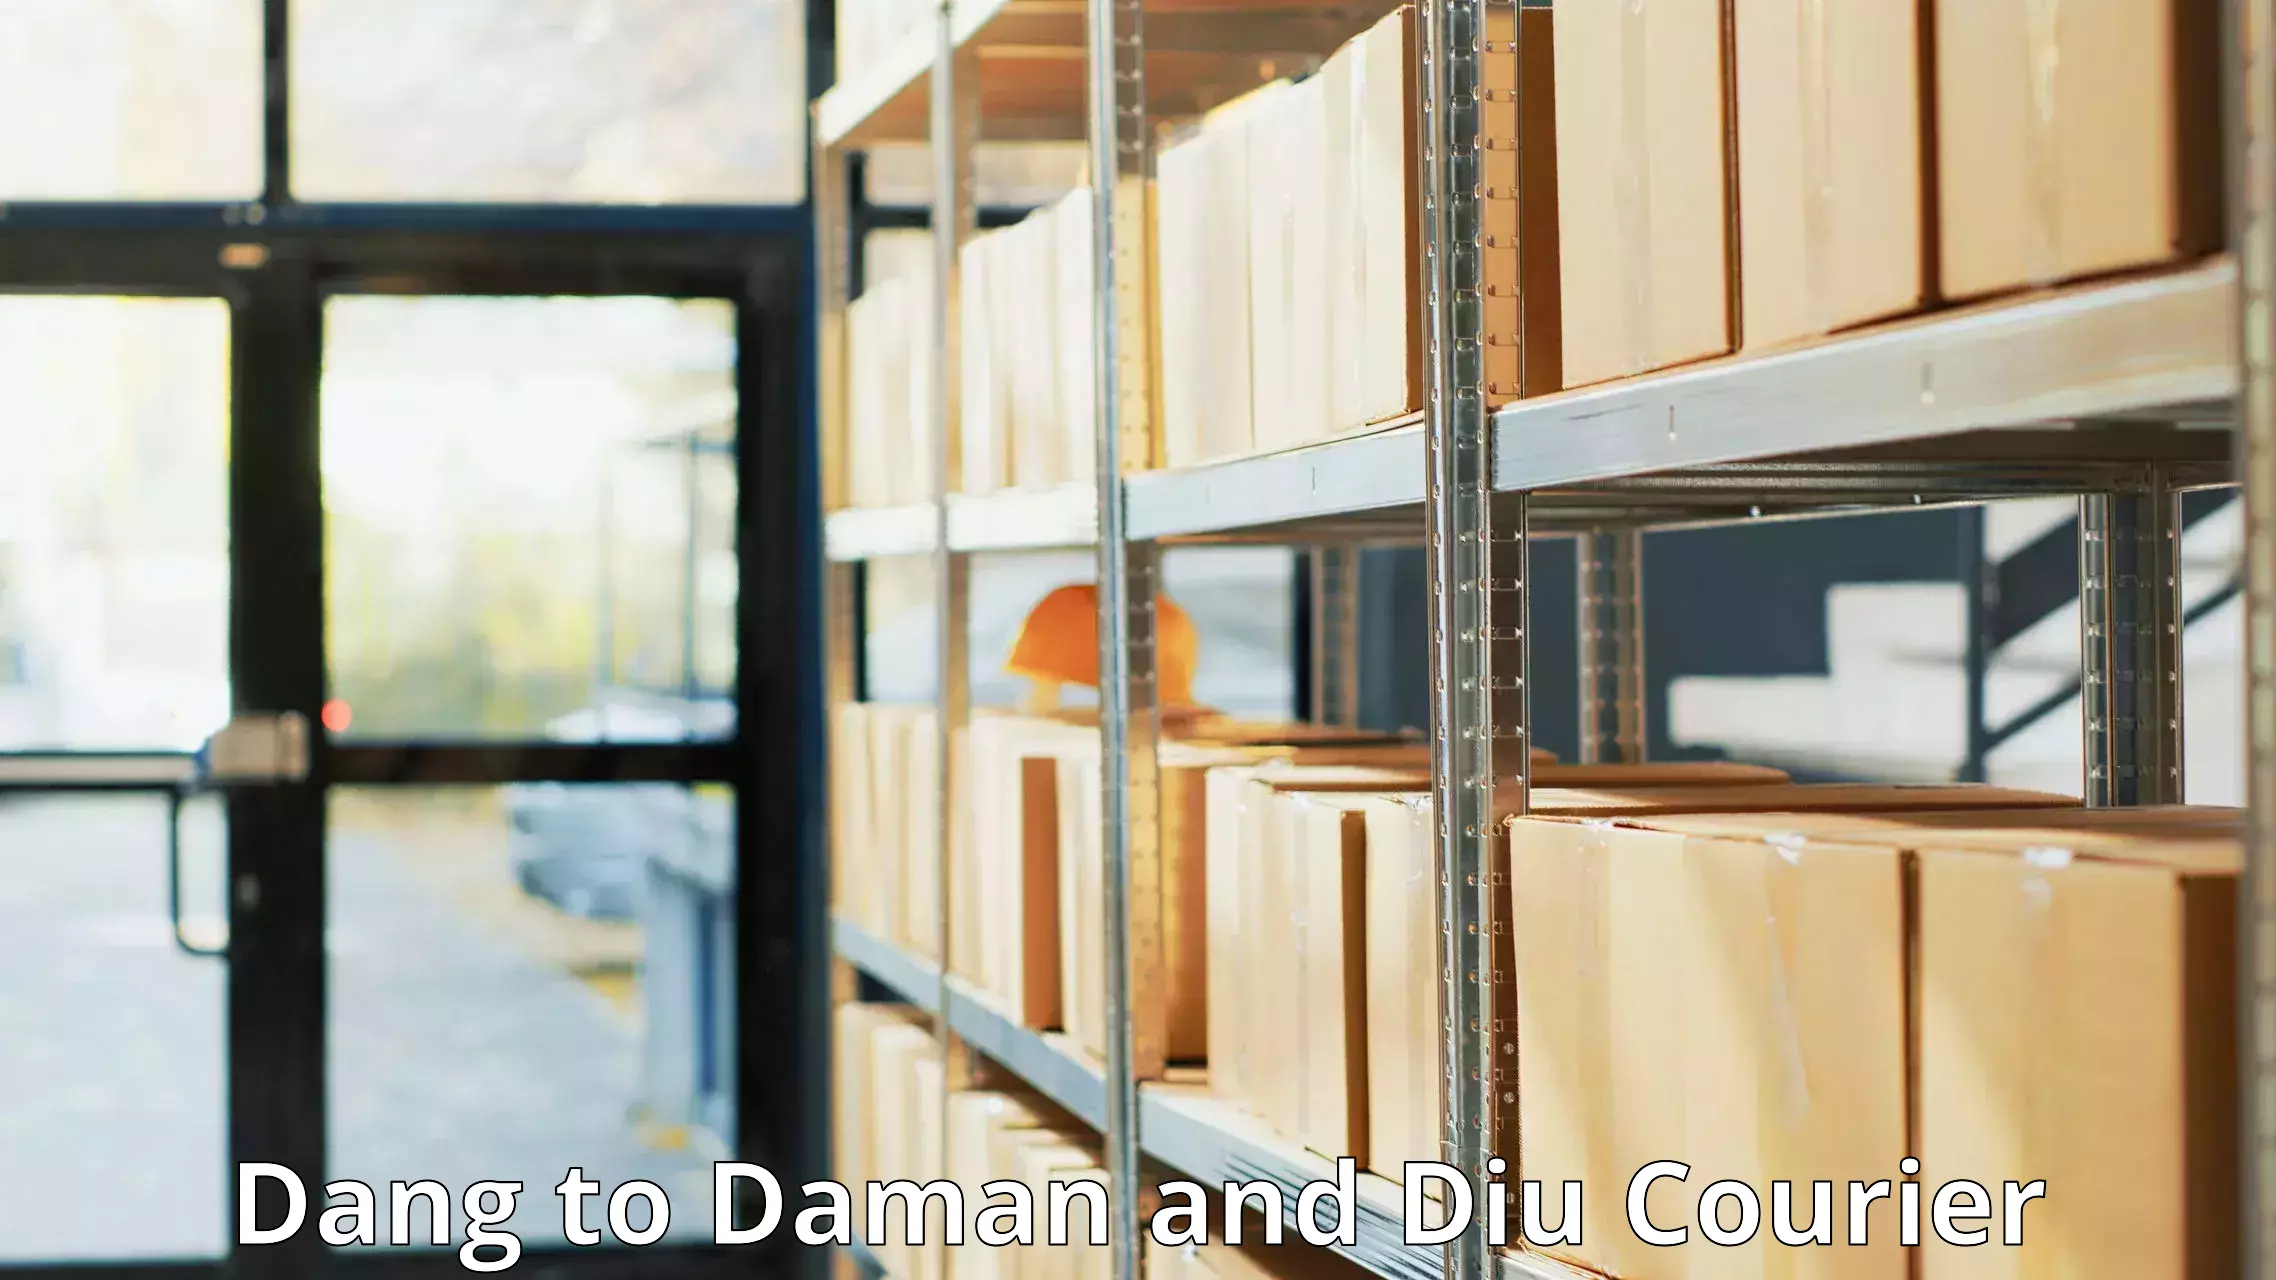 Efficient cargo handling Dang to Daman and Diu